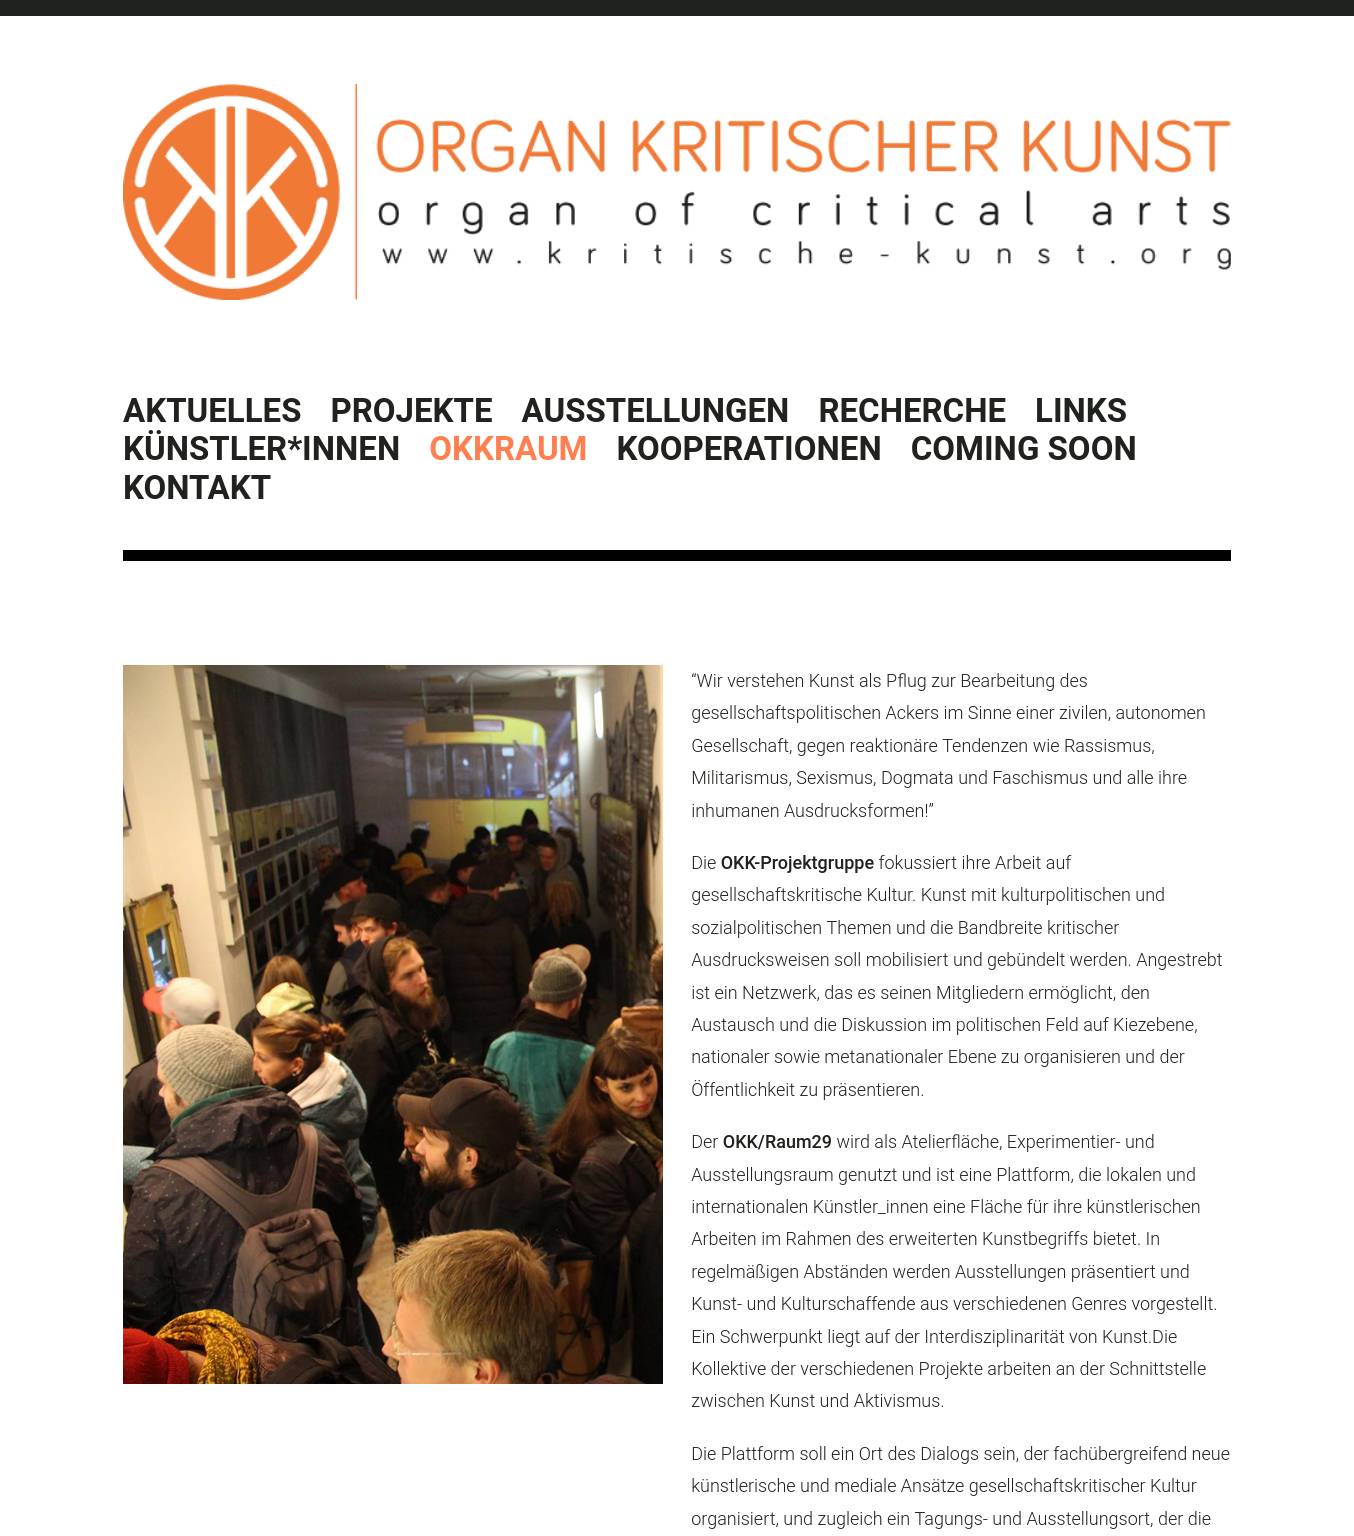 Large screenshot of OKK - Organ kritischer Kunst - organ of critical arts